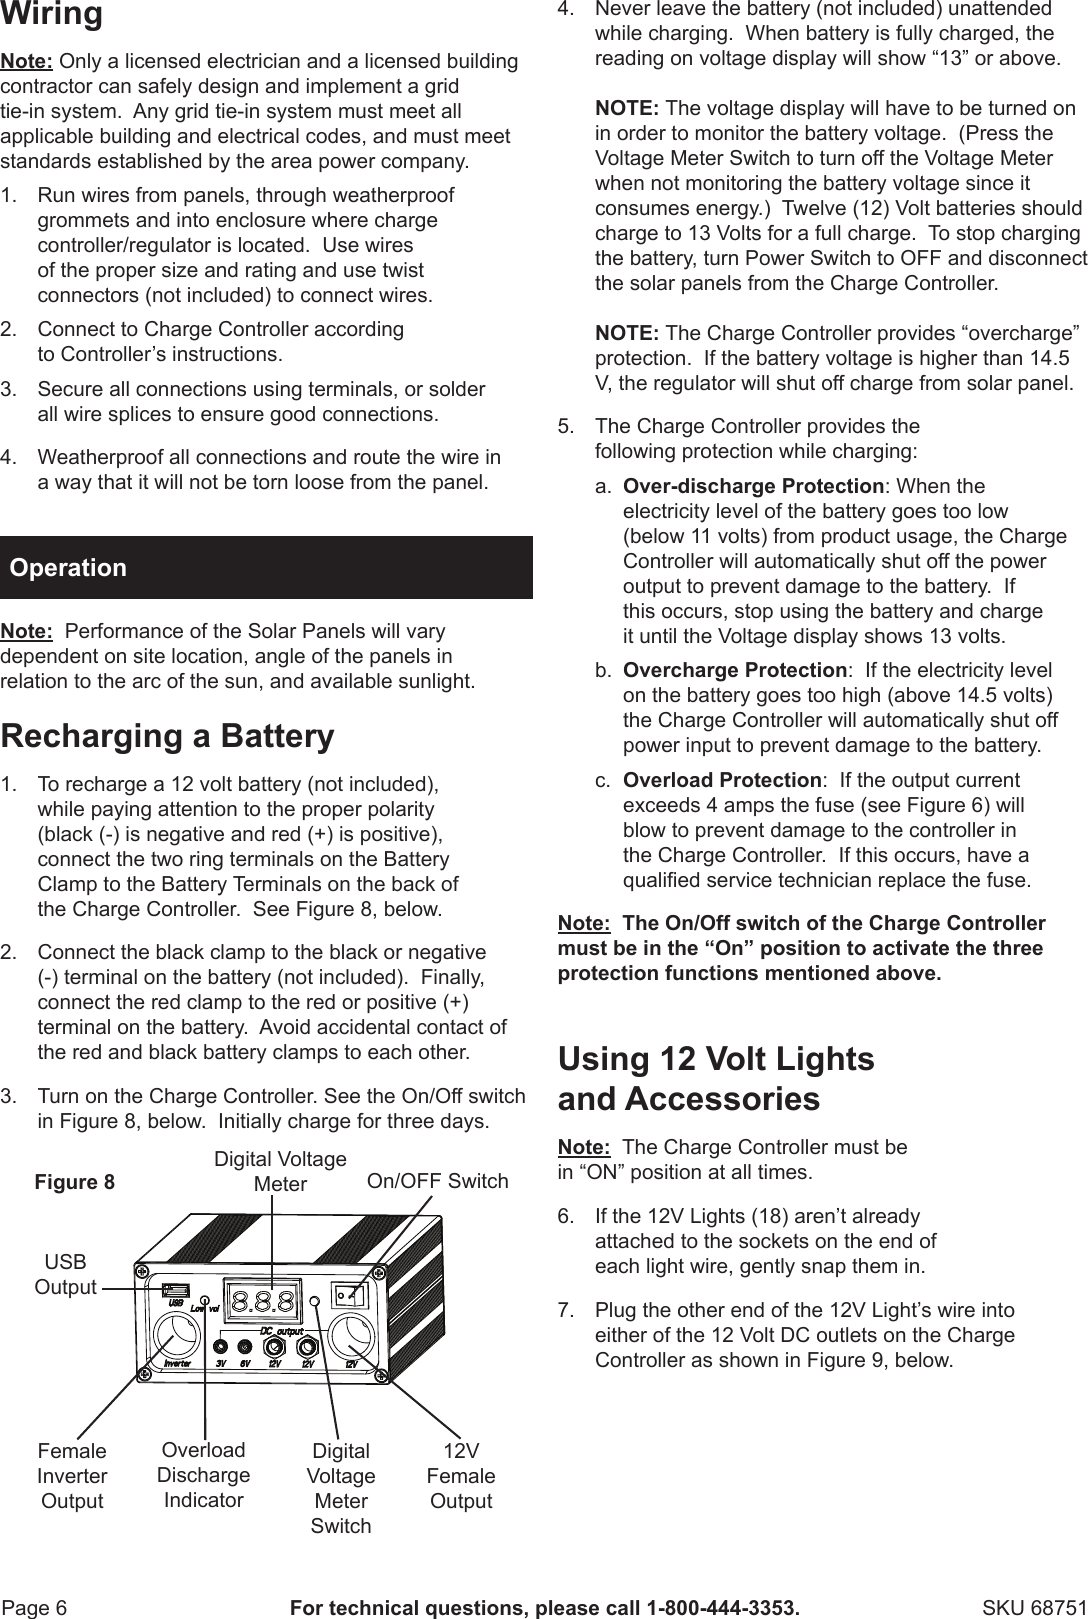 Page 6 of 11 - Harbor-Freight Harbor-Freight-45-Watt-Solar-Panel-Kit-Product-Manual-  Harbor-freight-45-watt-solar-panel-kit-product-manual